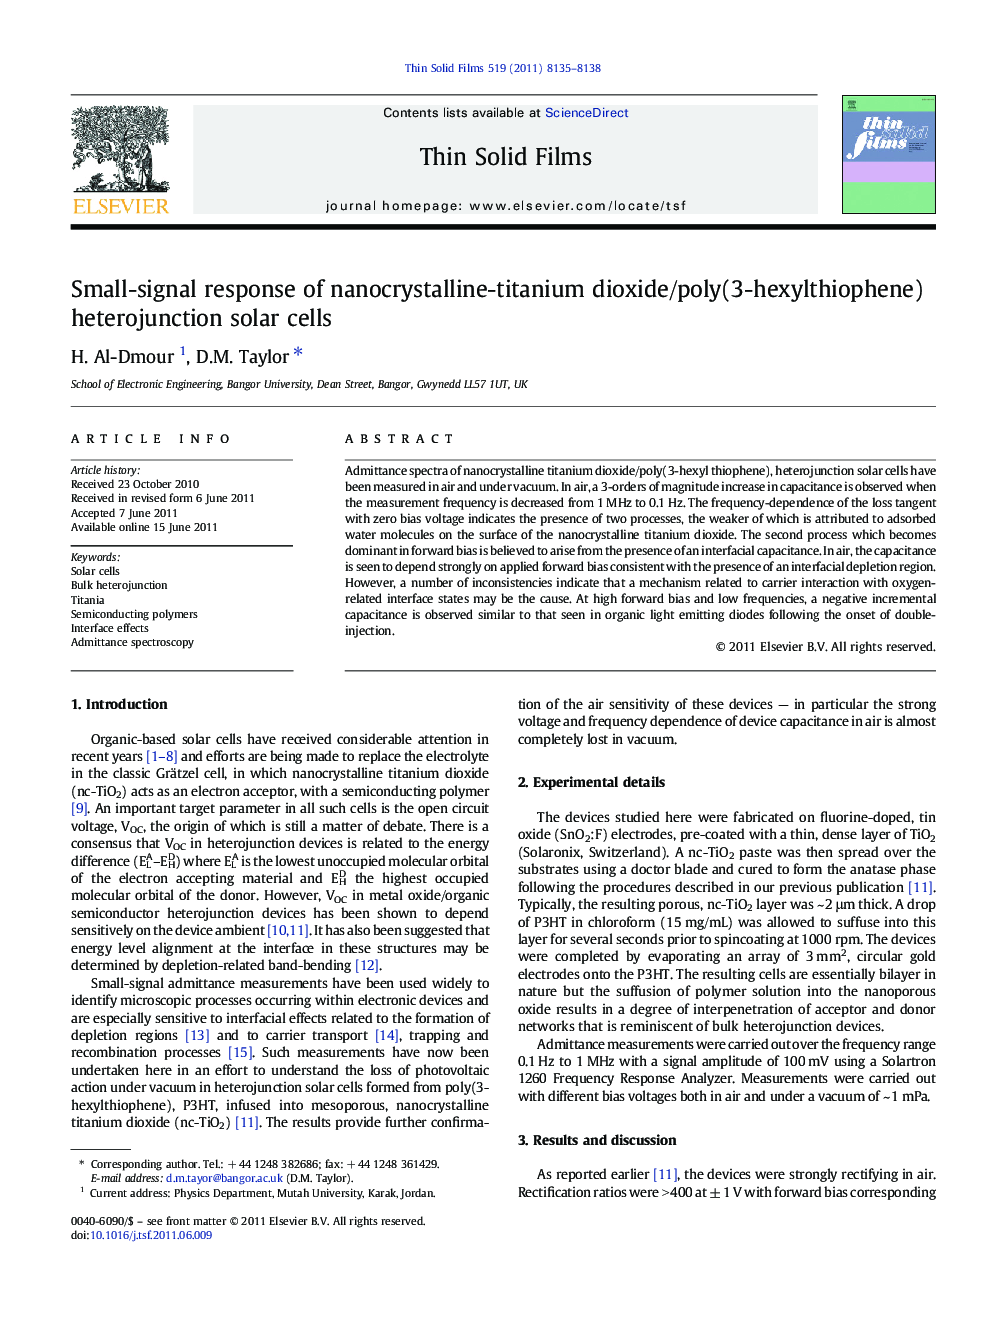 Small-signal response of nanocrystalline-titanium dioxide/poly(3-hexylthiophene) heterojunction solar cells